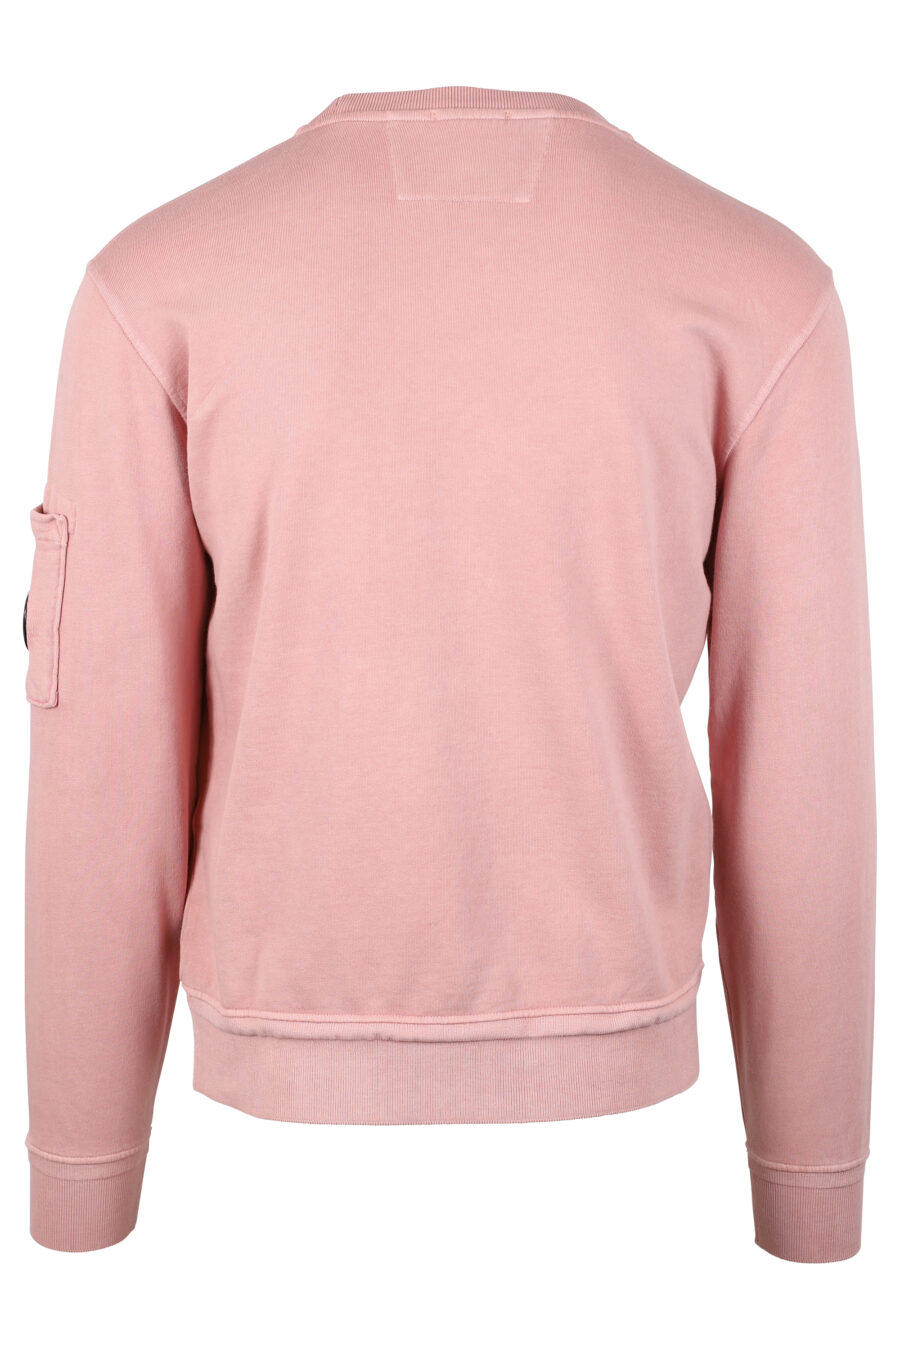 Pink sweatshirt with fleece lining and circular mini logo - IMG 4702